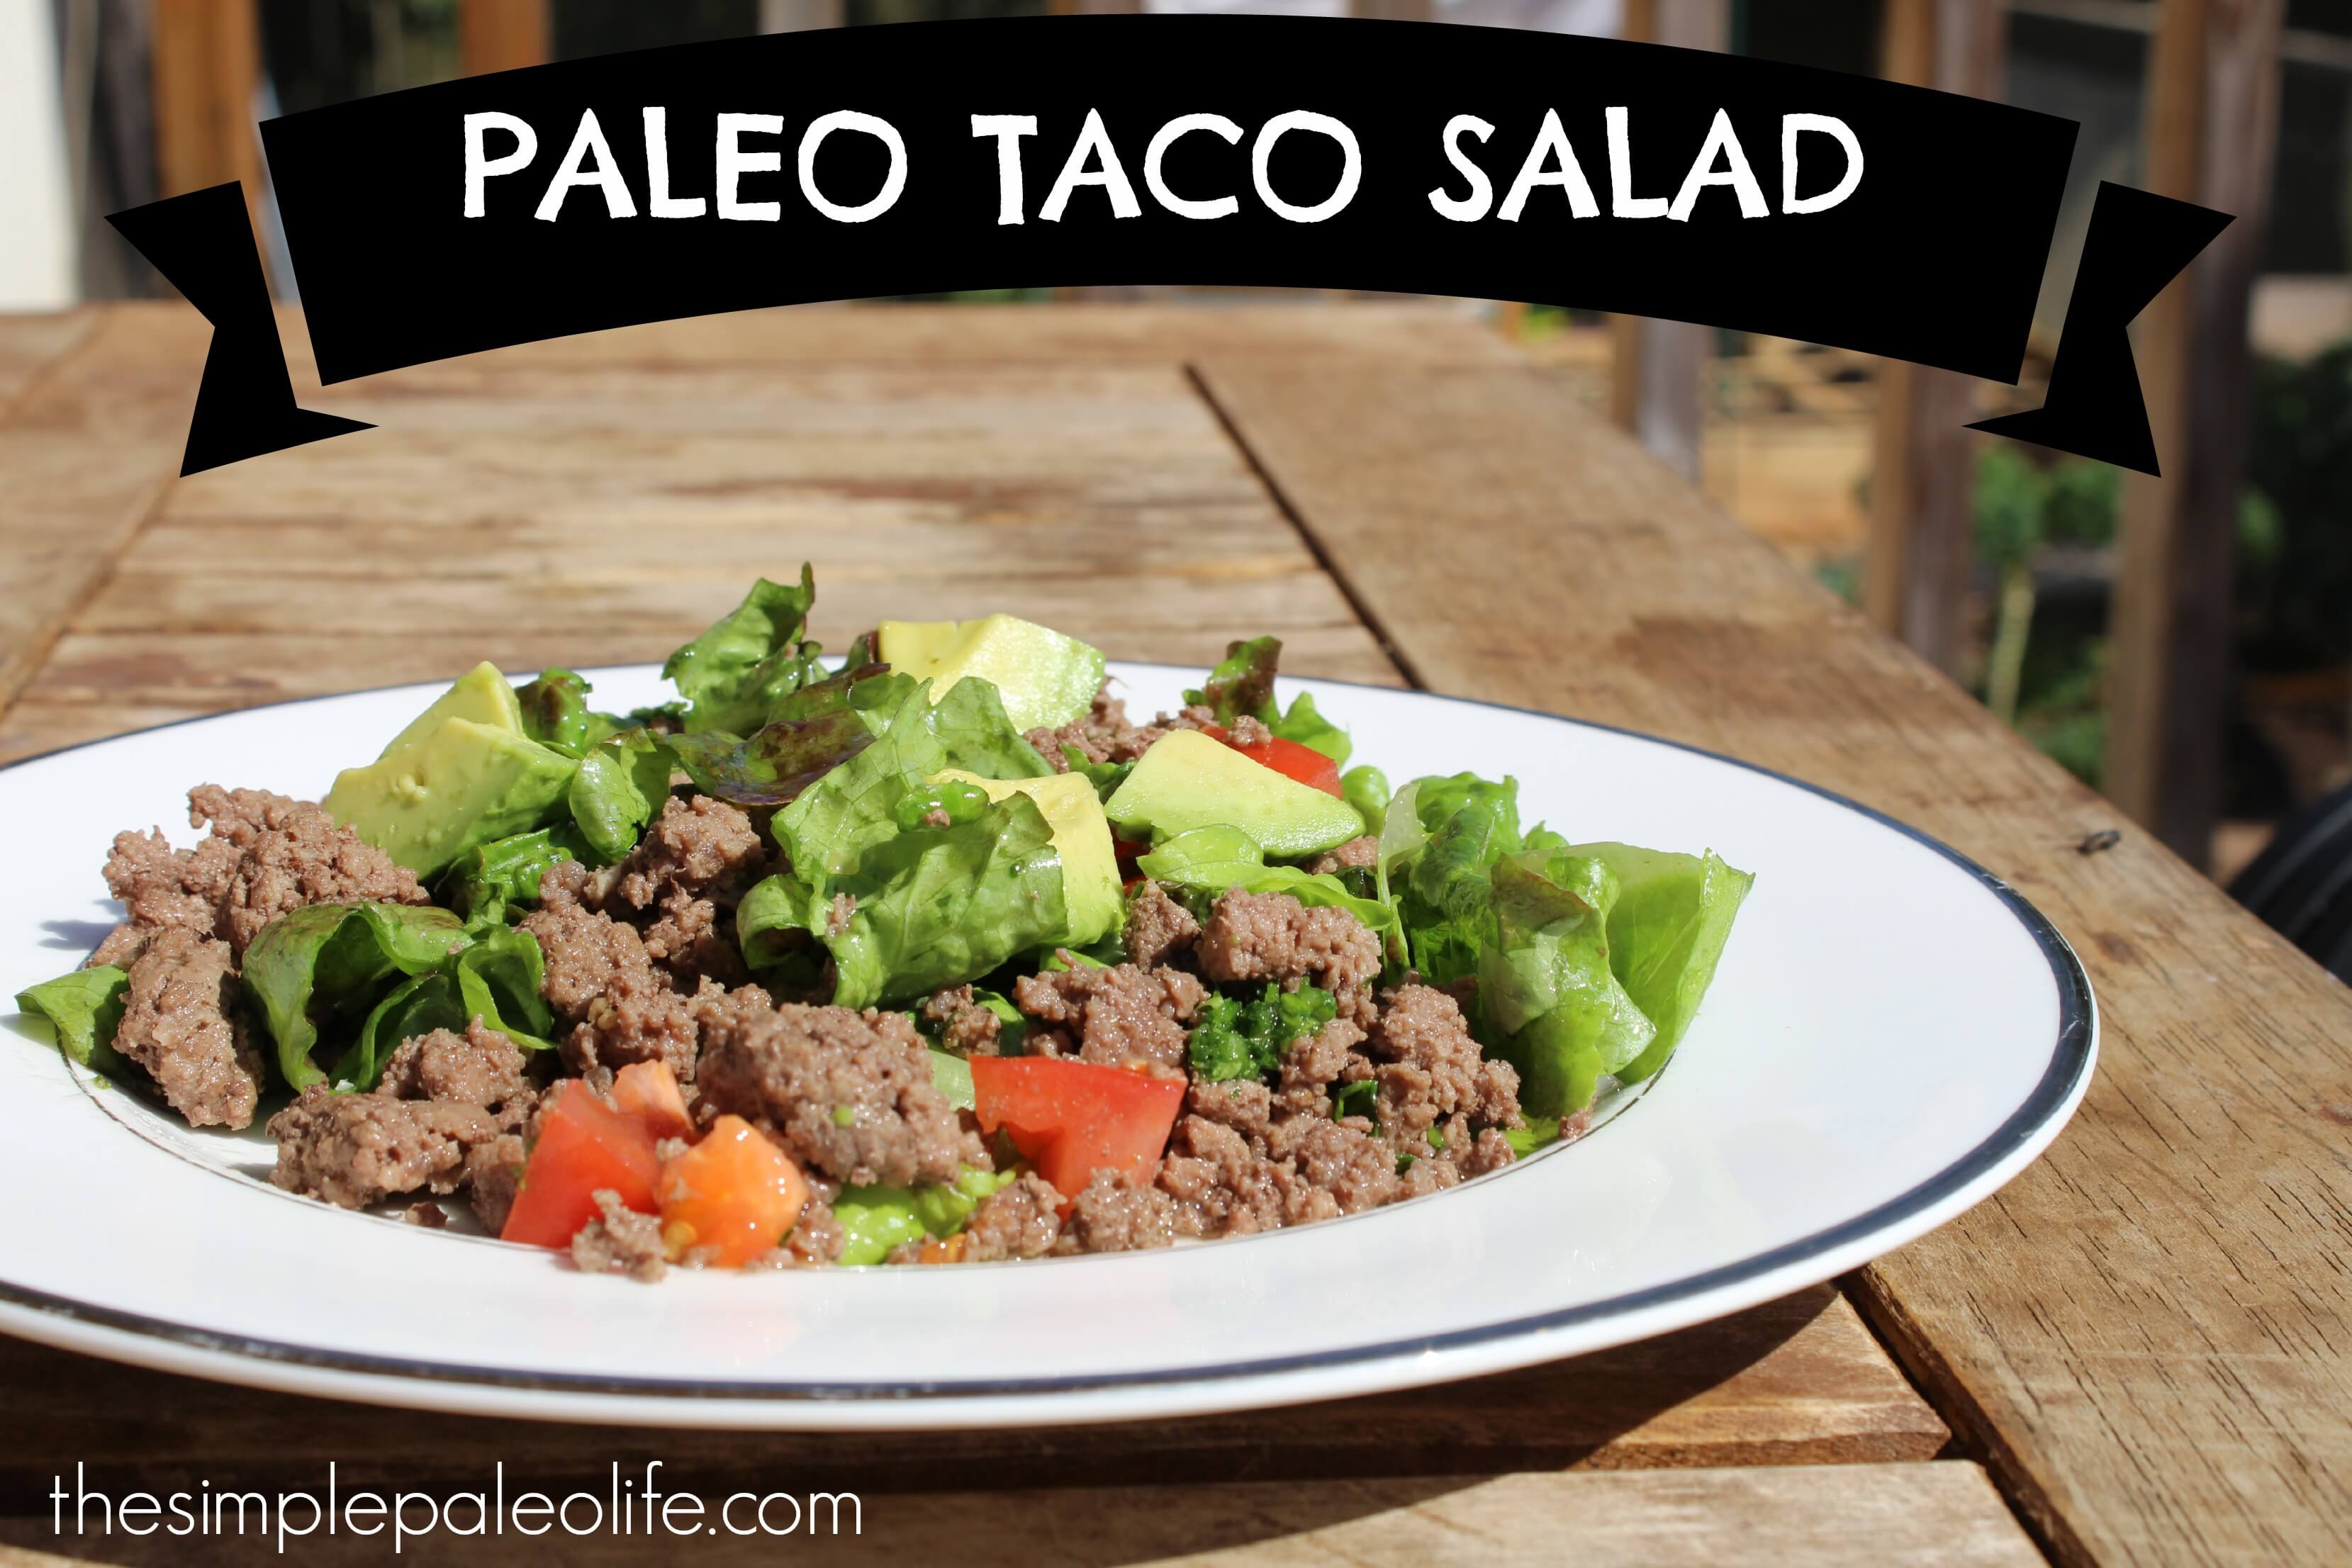 PALEO TACO SALAD (Minus the Taco!)